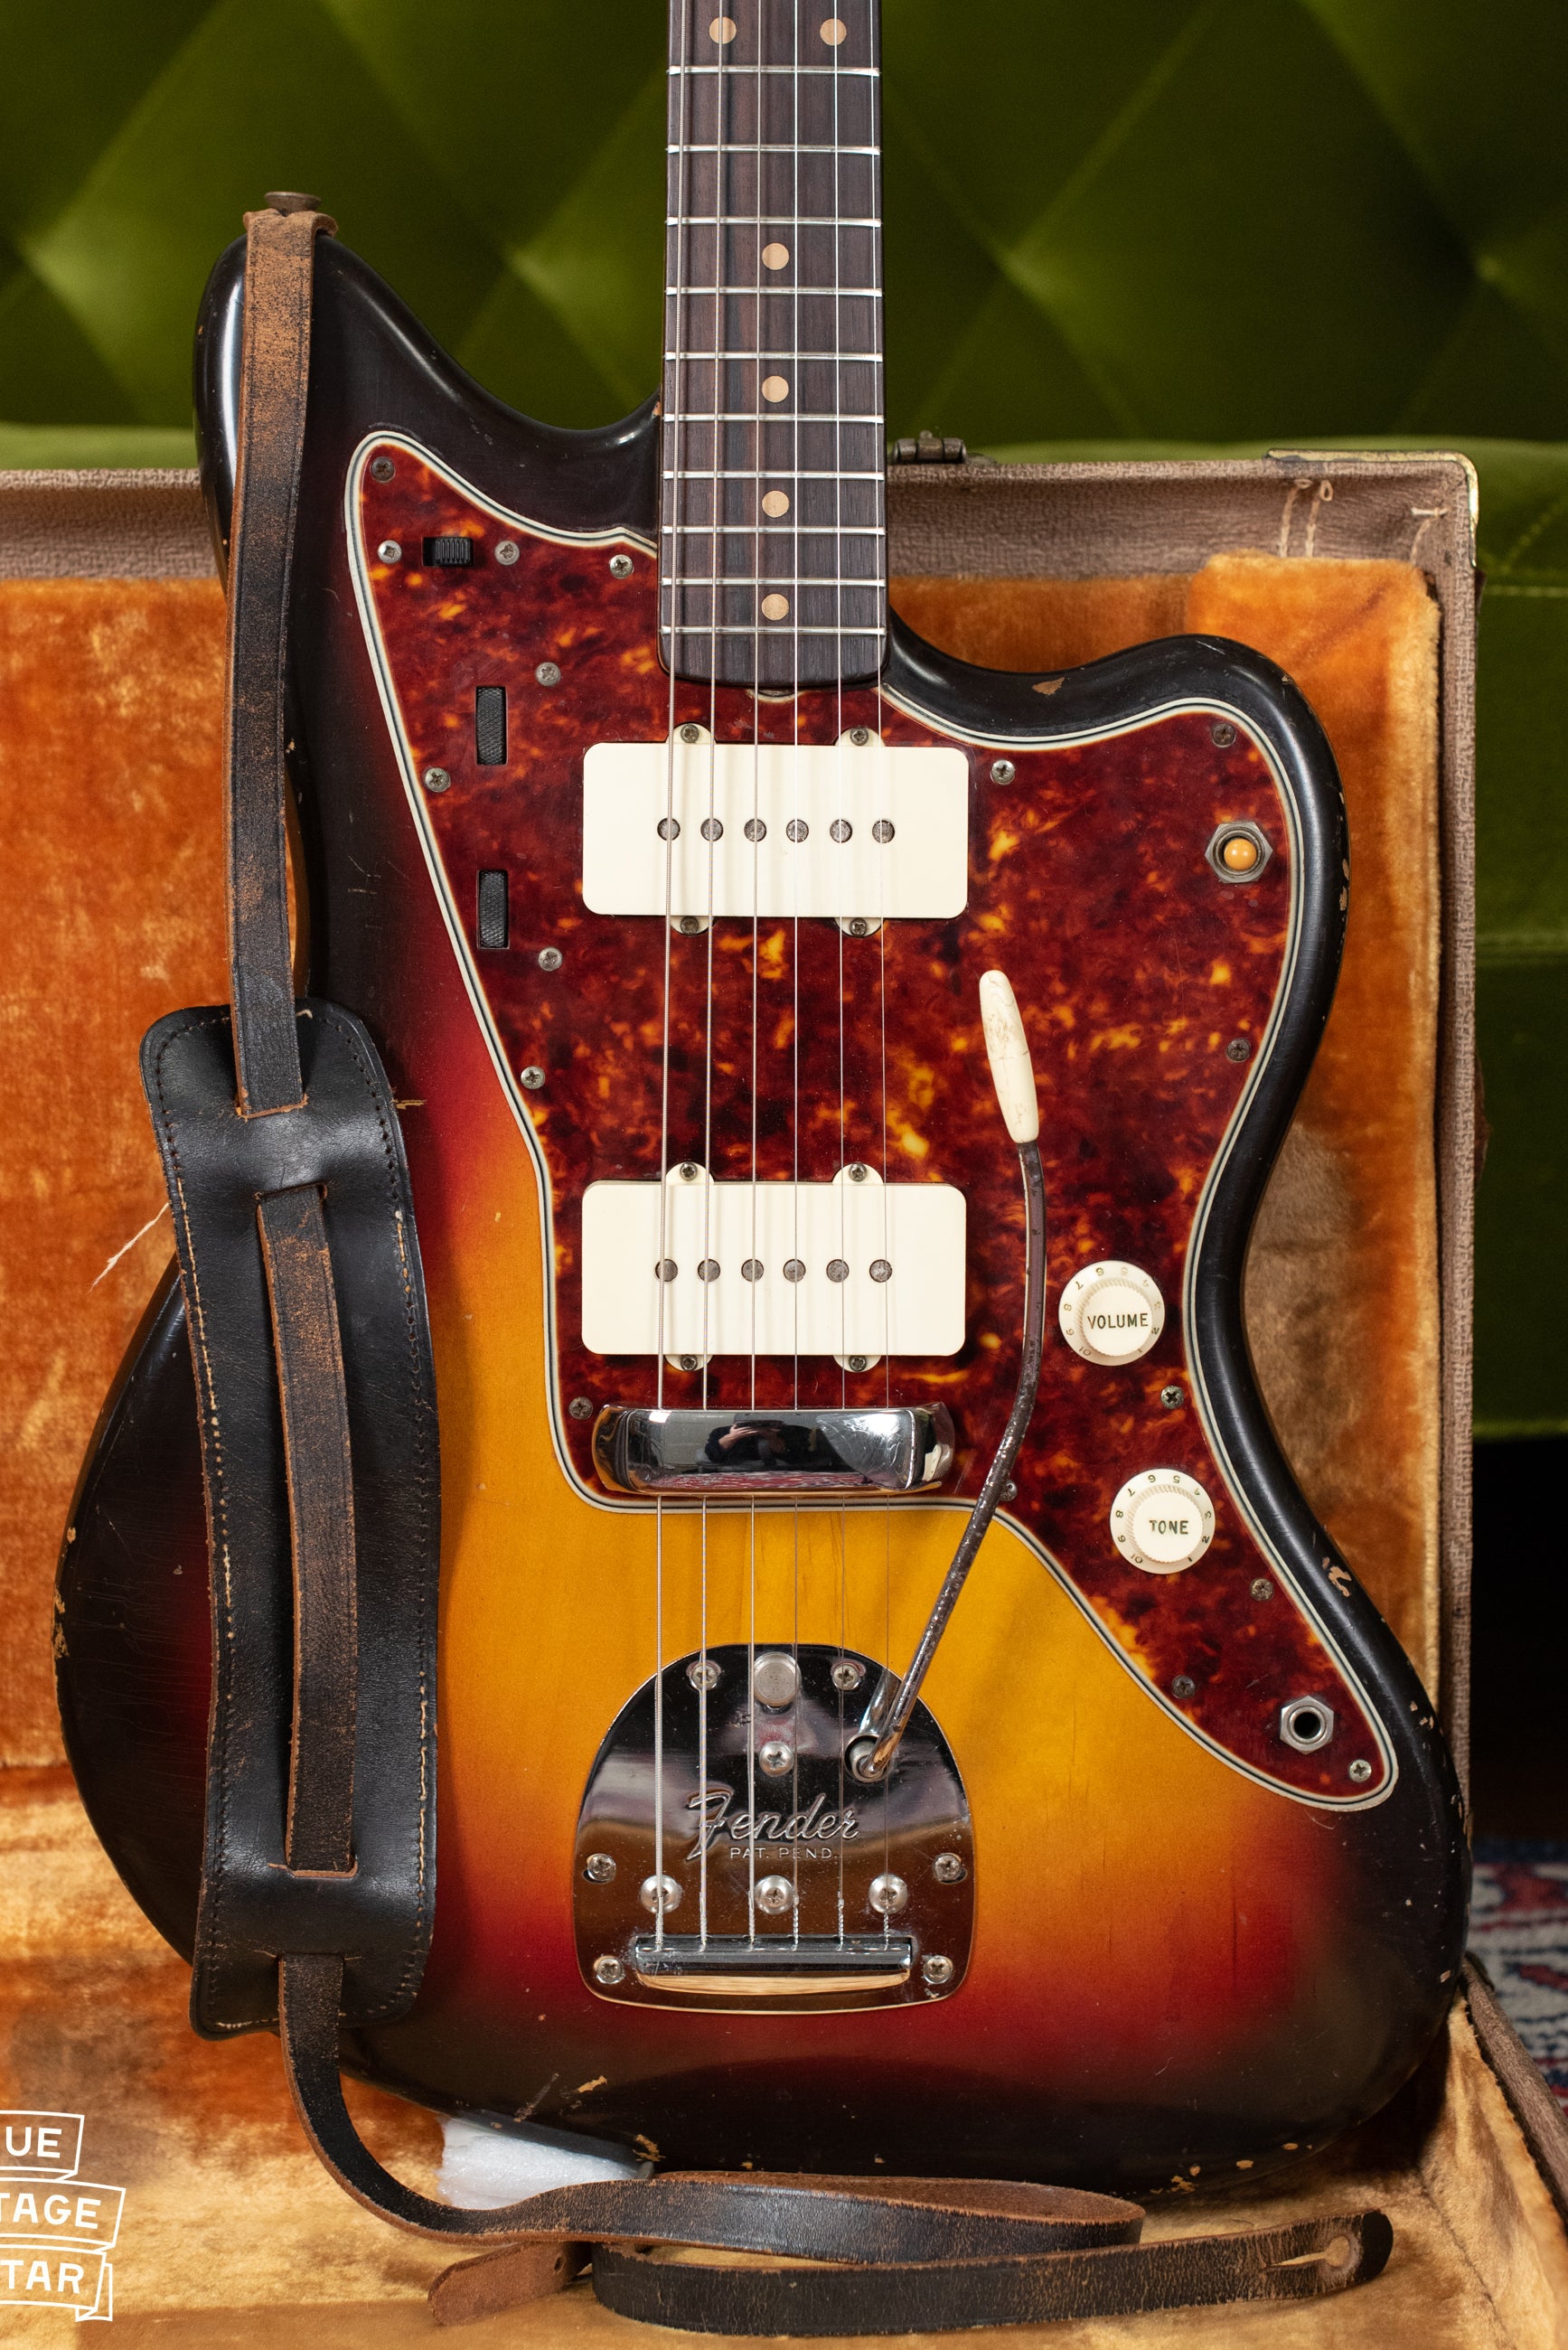 1961 Fender Jazzmaster electric guitar